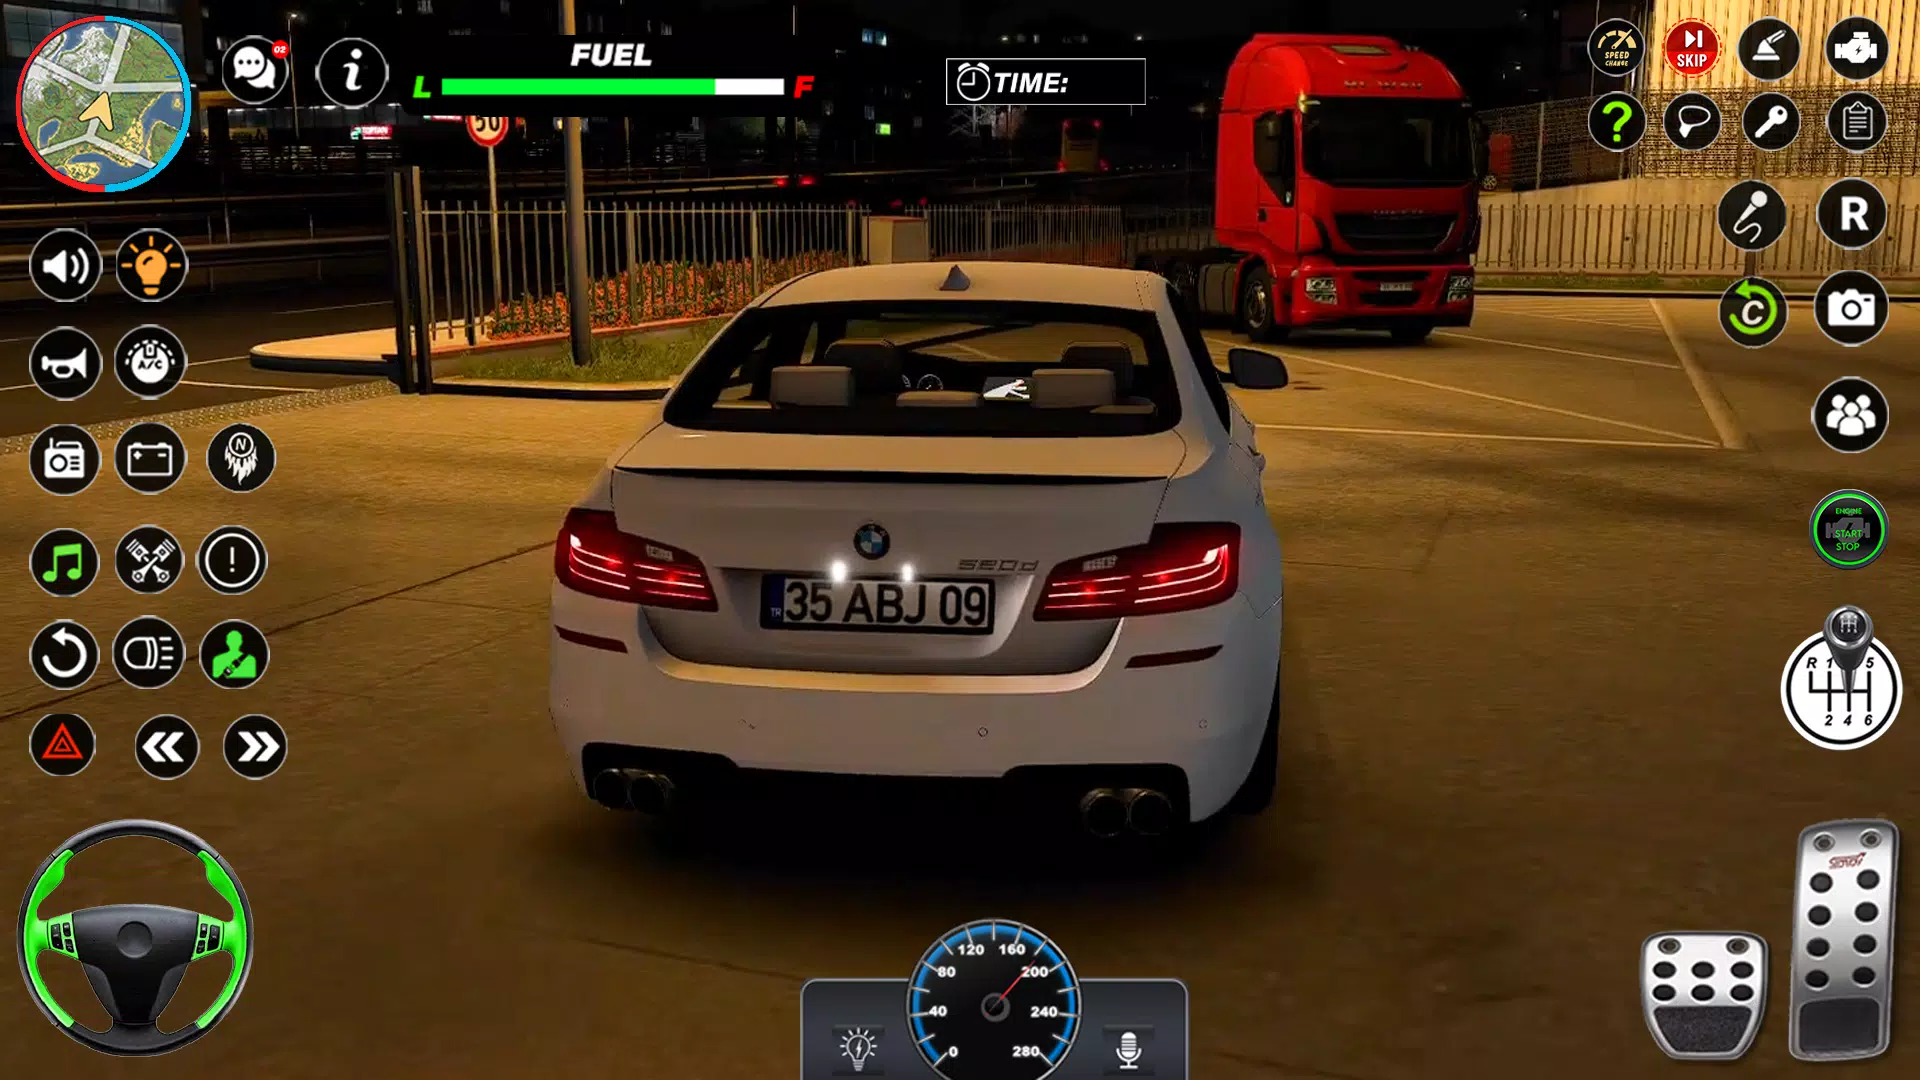 Download do APK de Jogos de Estacionar Carro Luxo para Android